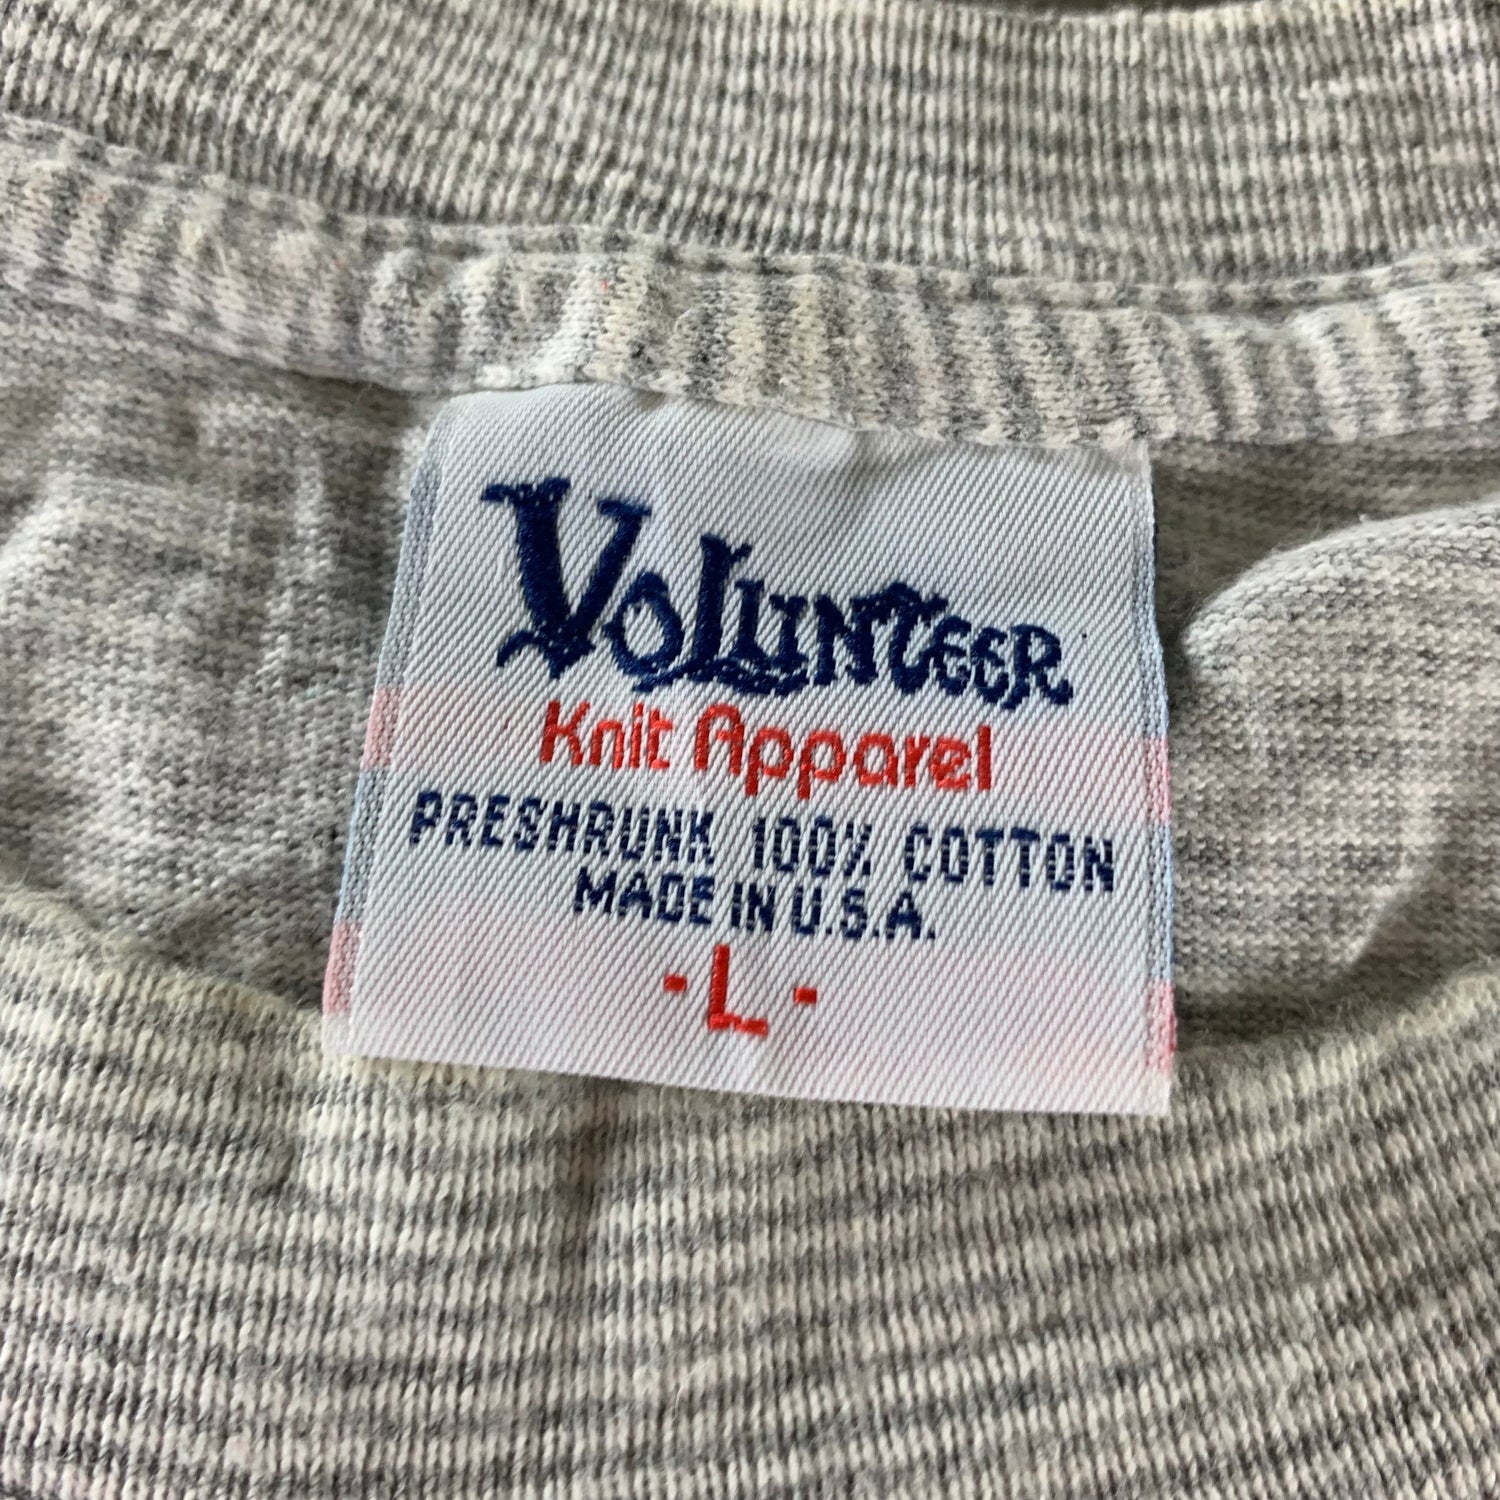 Vintage 1990s Puerto Rico T-shirt size Large